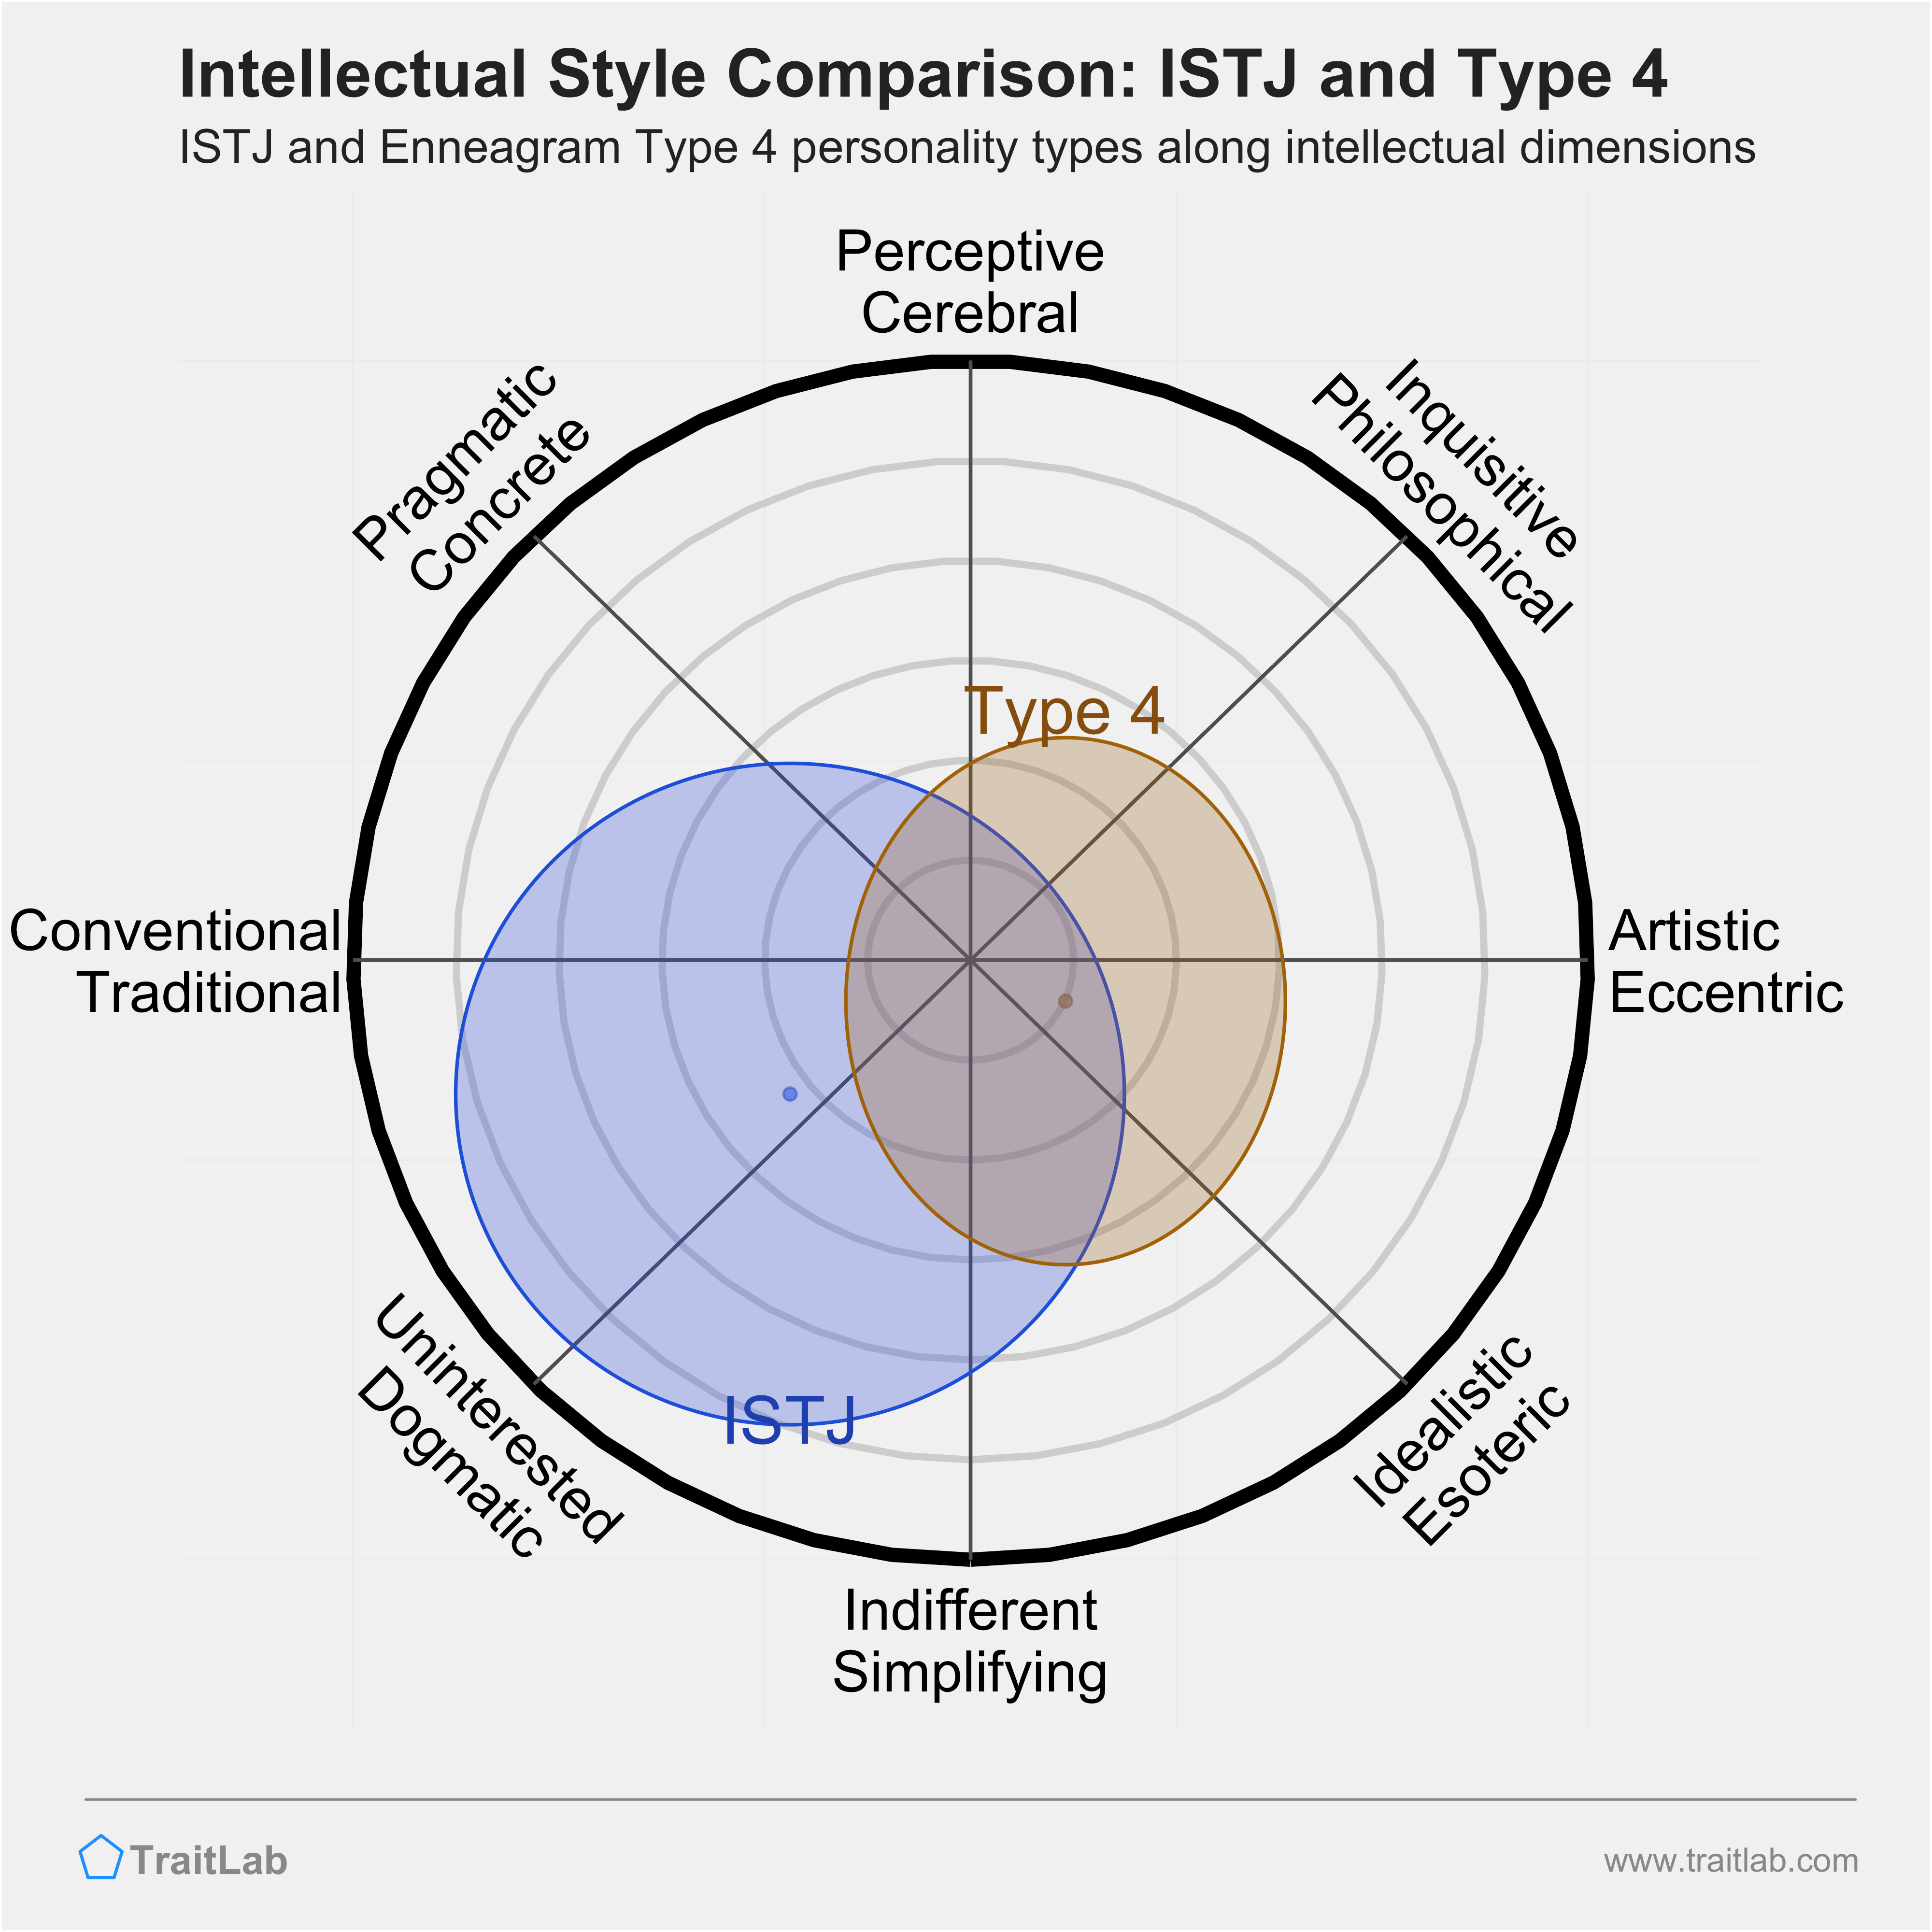 ISTJ and Type 4 comparison across intellectual dimensions